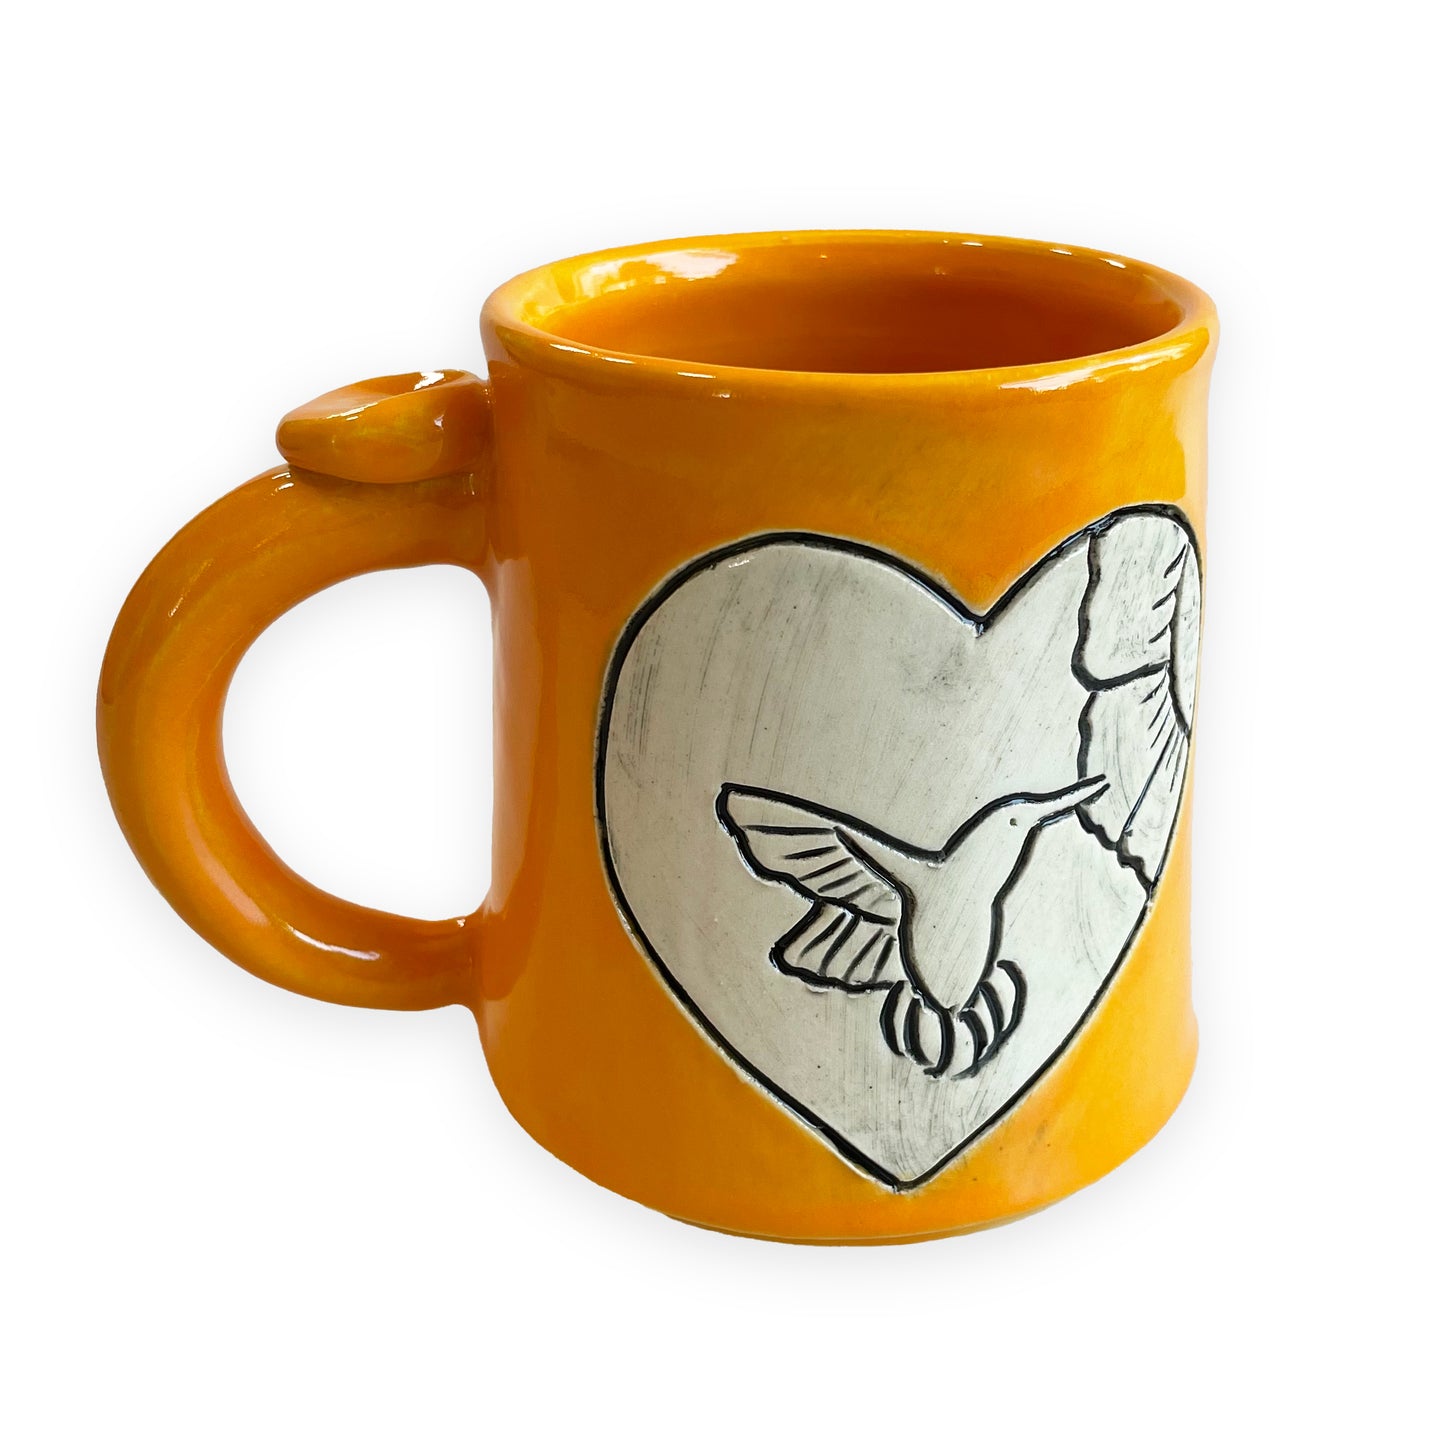 Humming Bird Heart Hand Carved Ceramic Mug